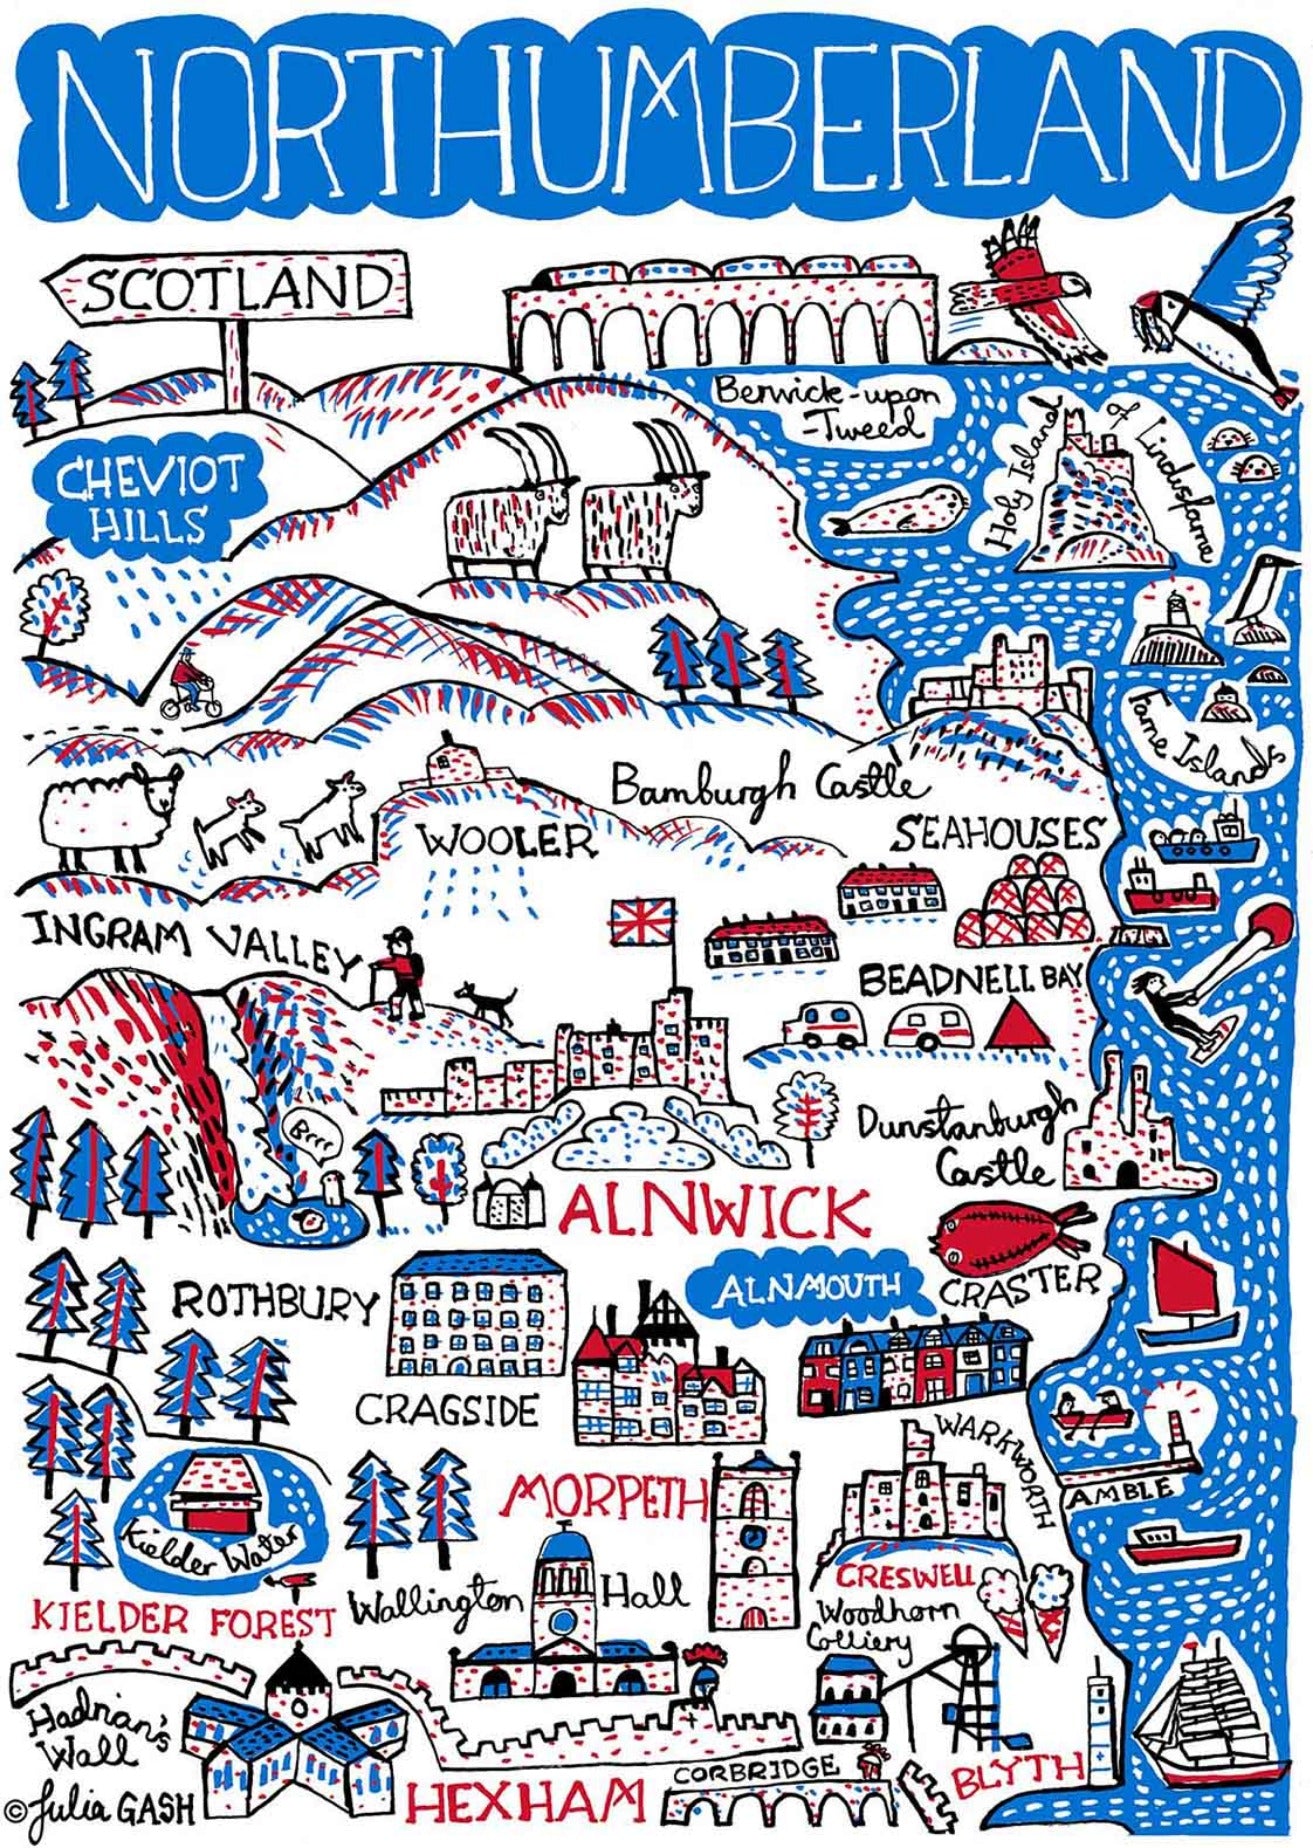 Northumberland Travel Art Print featuring Alnwick, Morpeth, Hexham by map illustrator Julia Gash